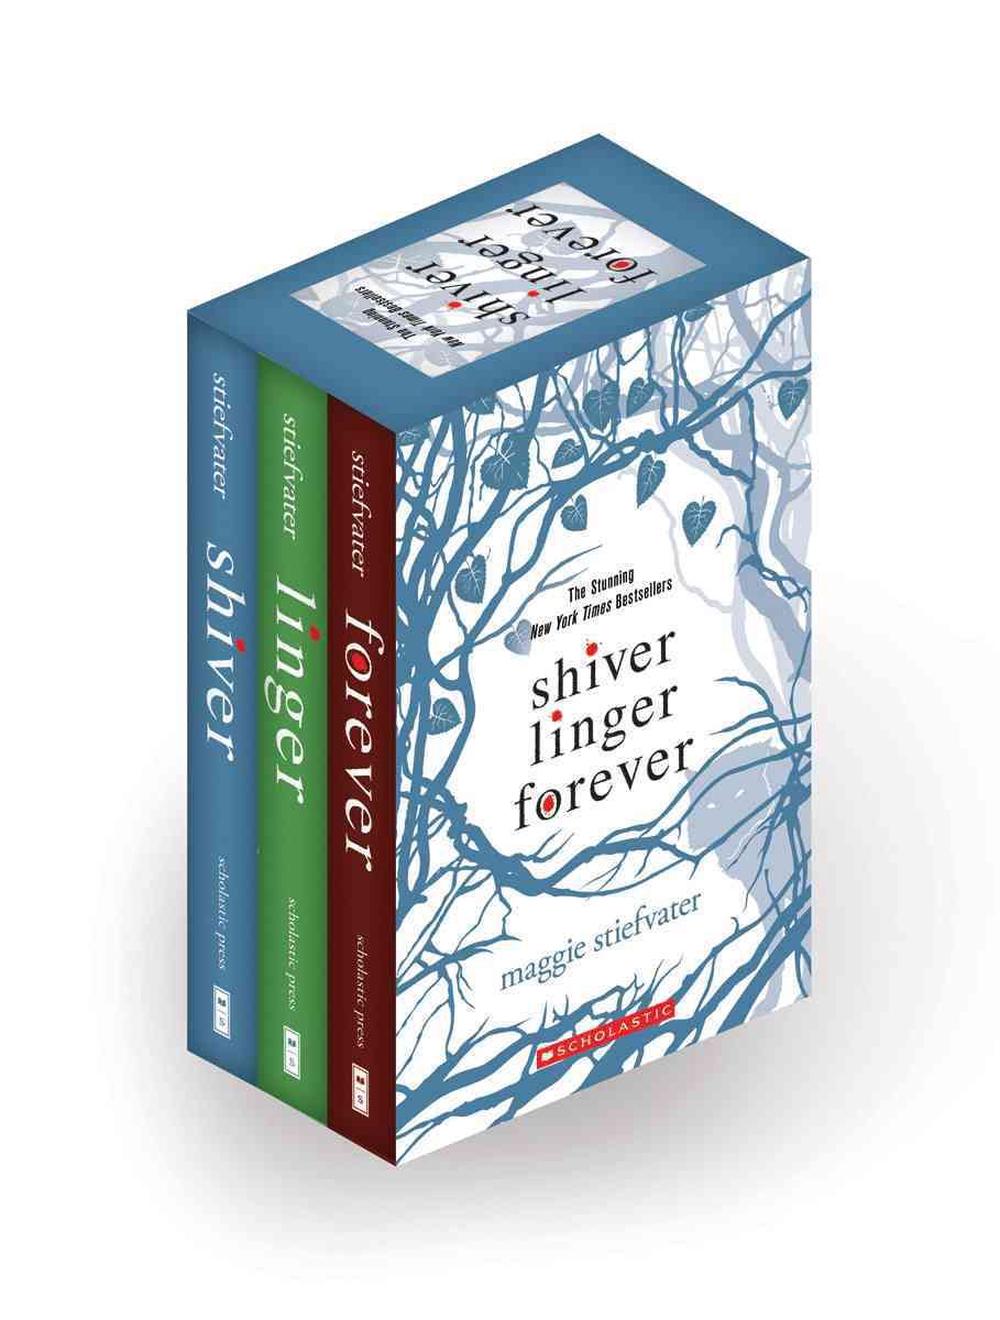 shiver linger forever book series